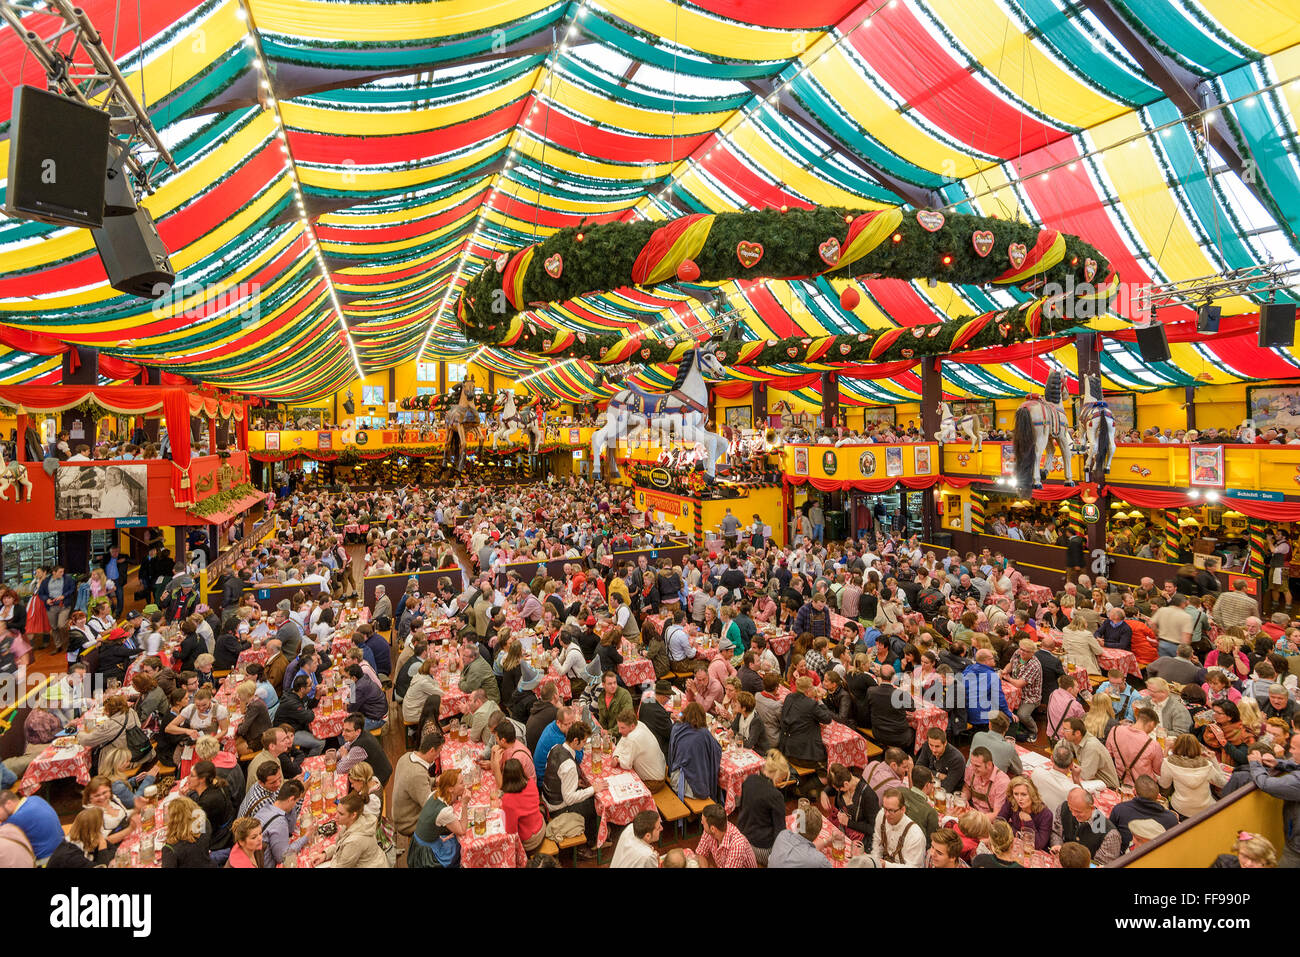 Folla in ippodromo birra tenda sulla Theresienwiese Oktoberfest fiera di Monaco di Baviera, Germania. Foto Stock